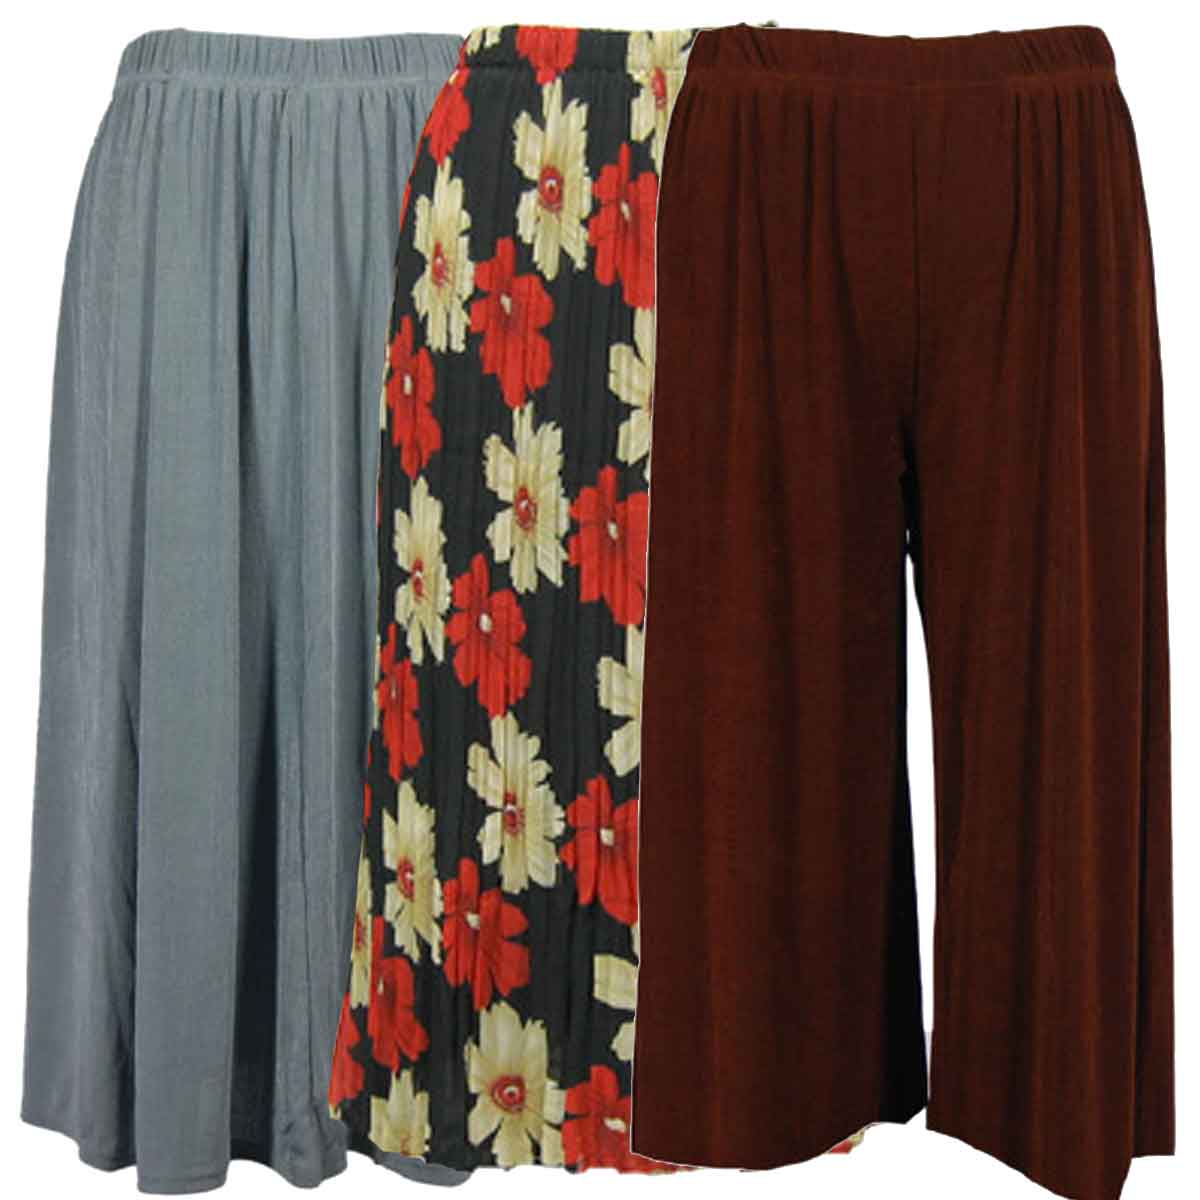 Wholesale Overstock Skirts, Pants, & Dresses - Sale<br>(40% Off)